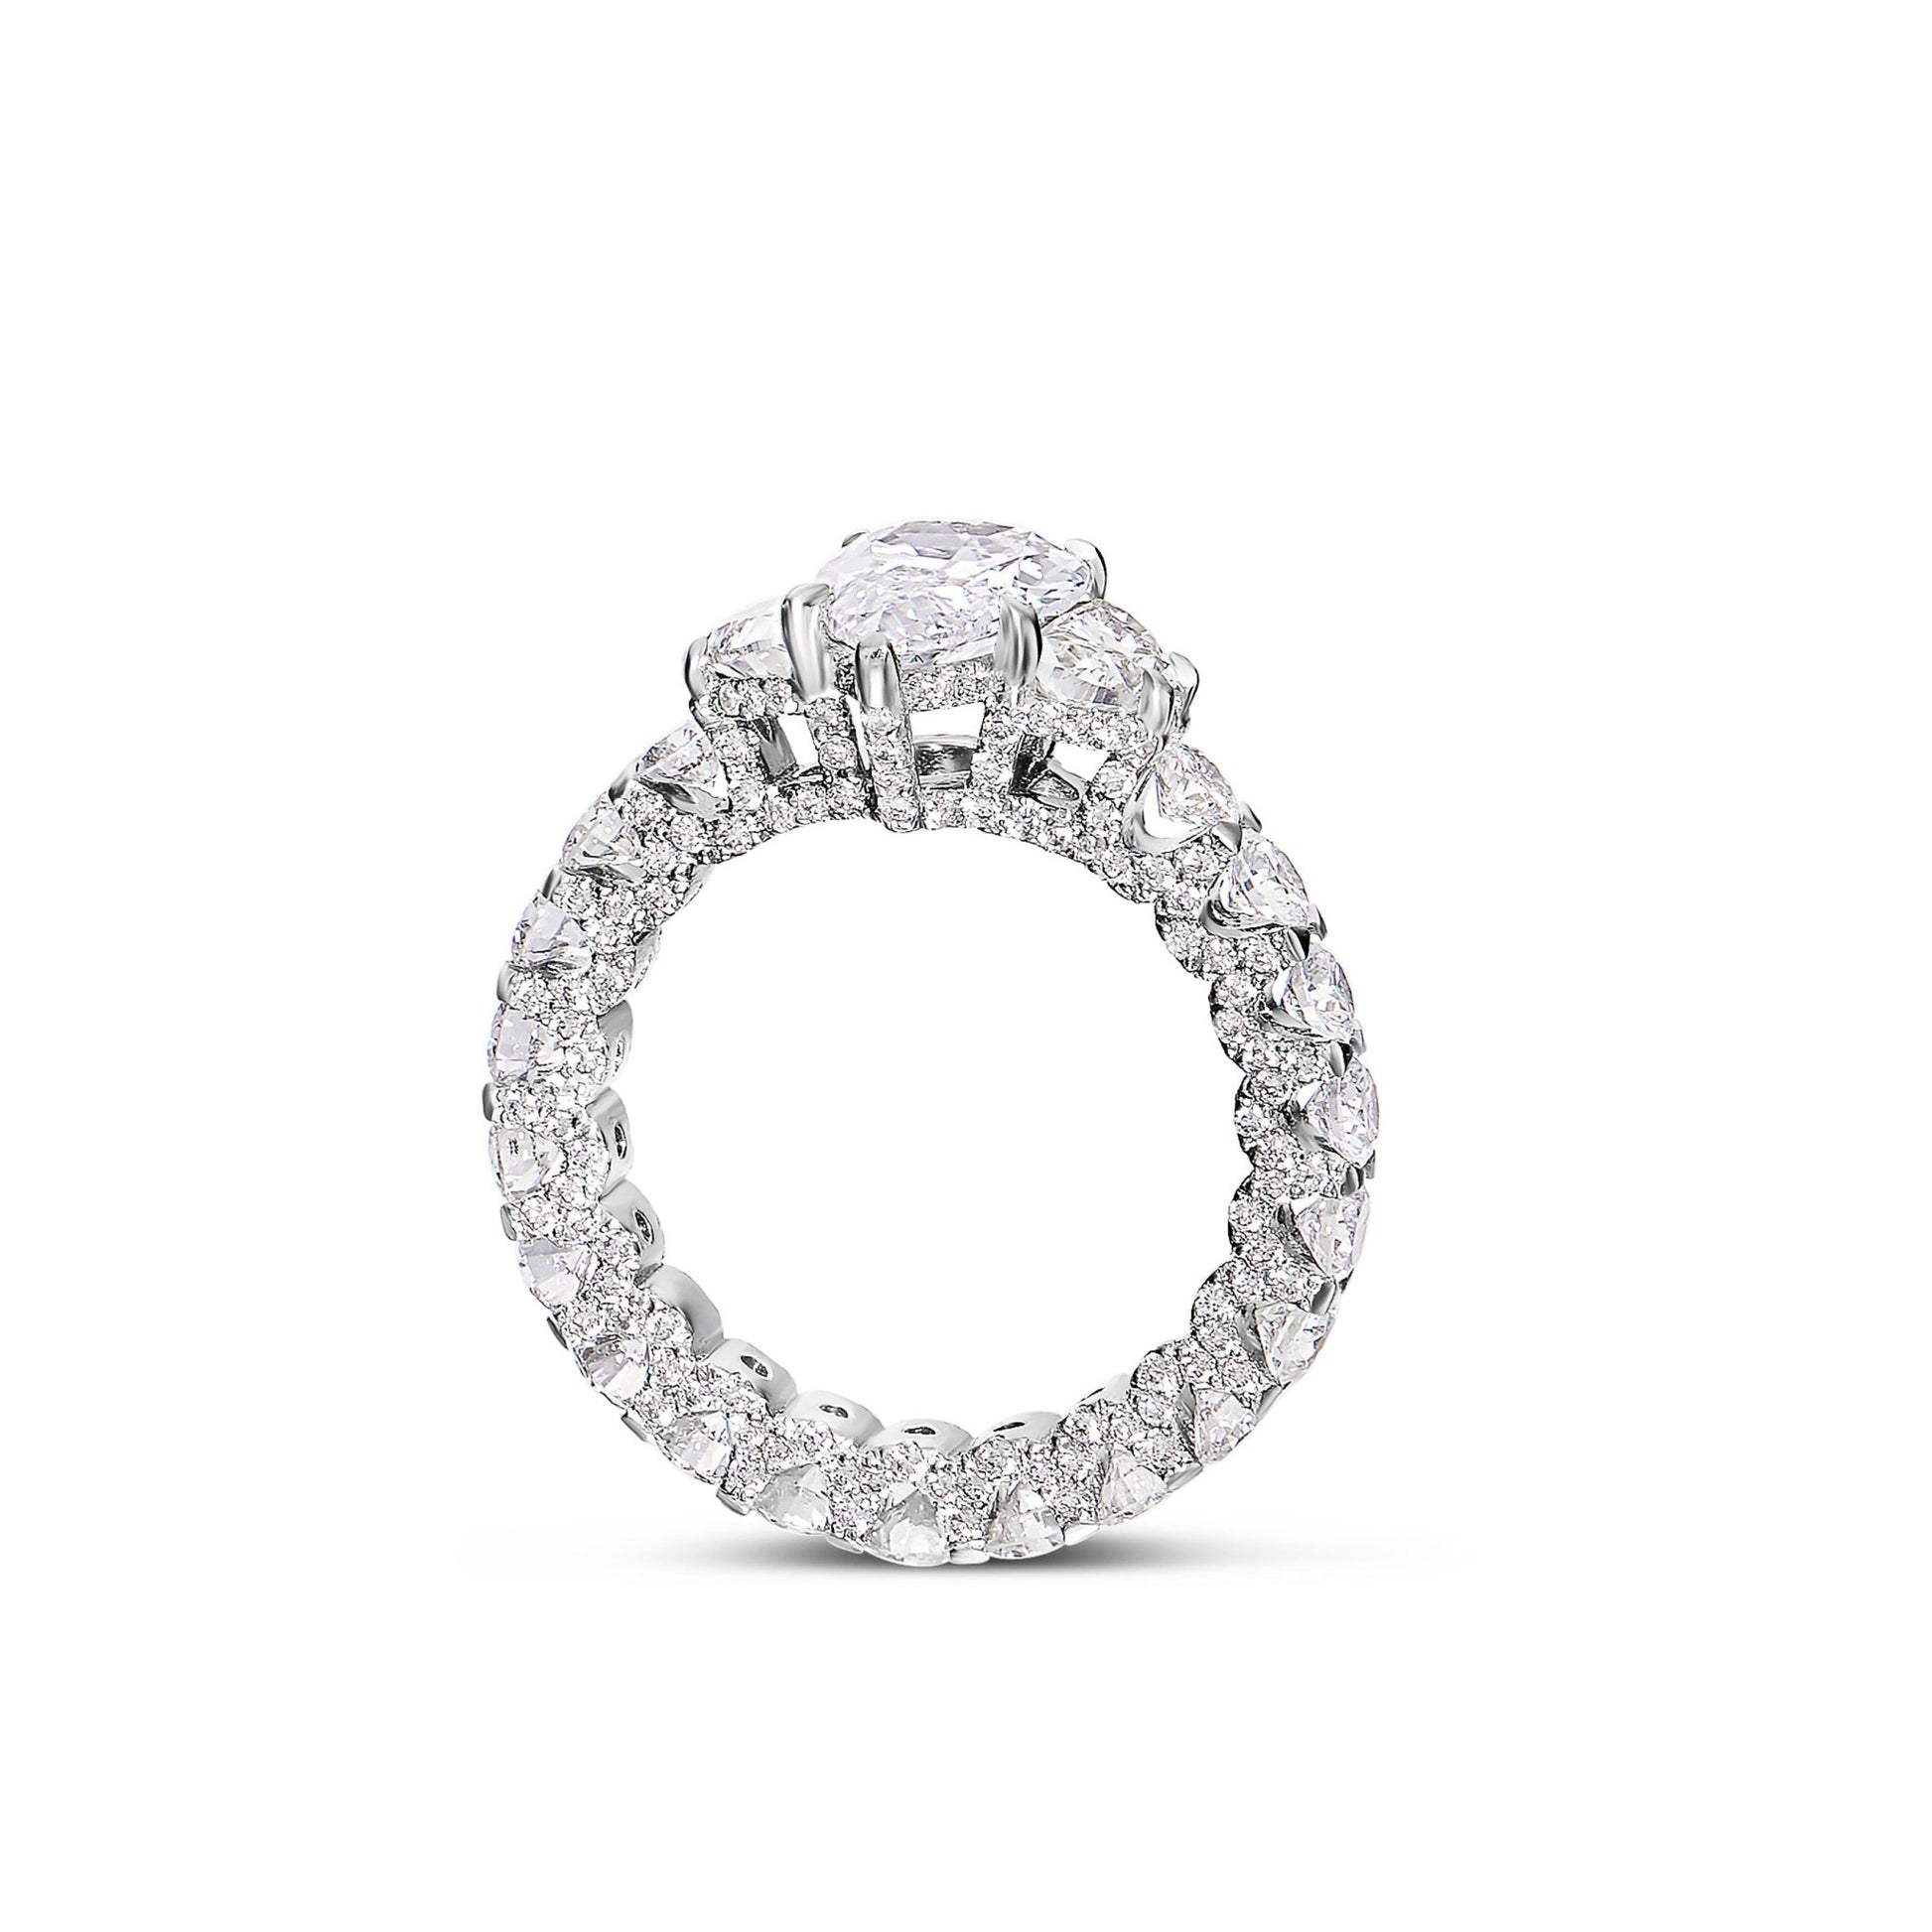 Pear Shaped Diamond Ring - Shyne Jewelers PEARENGR_2 Shyne Jewelers